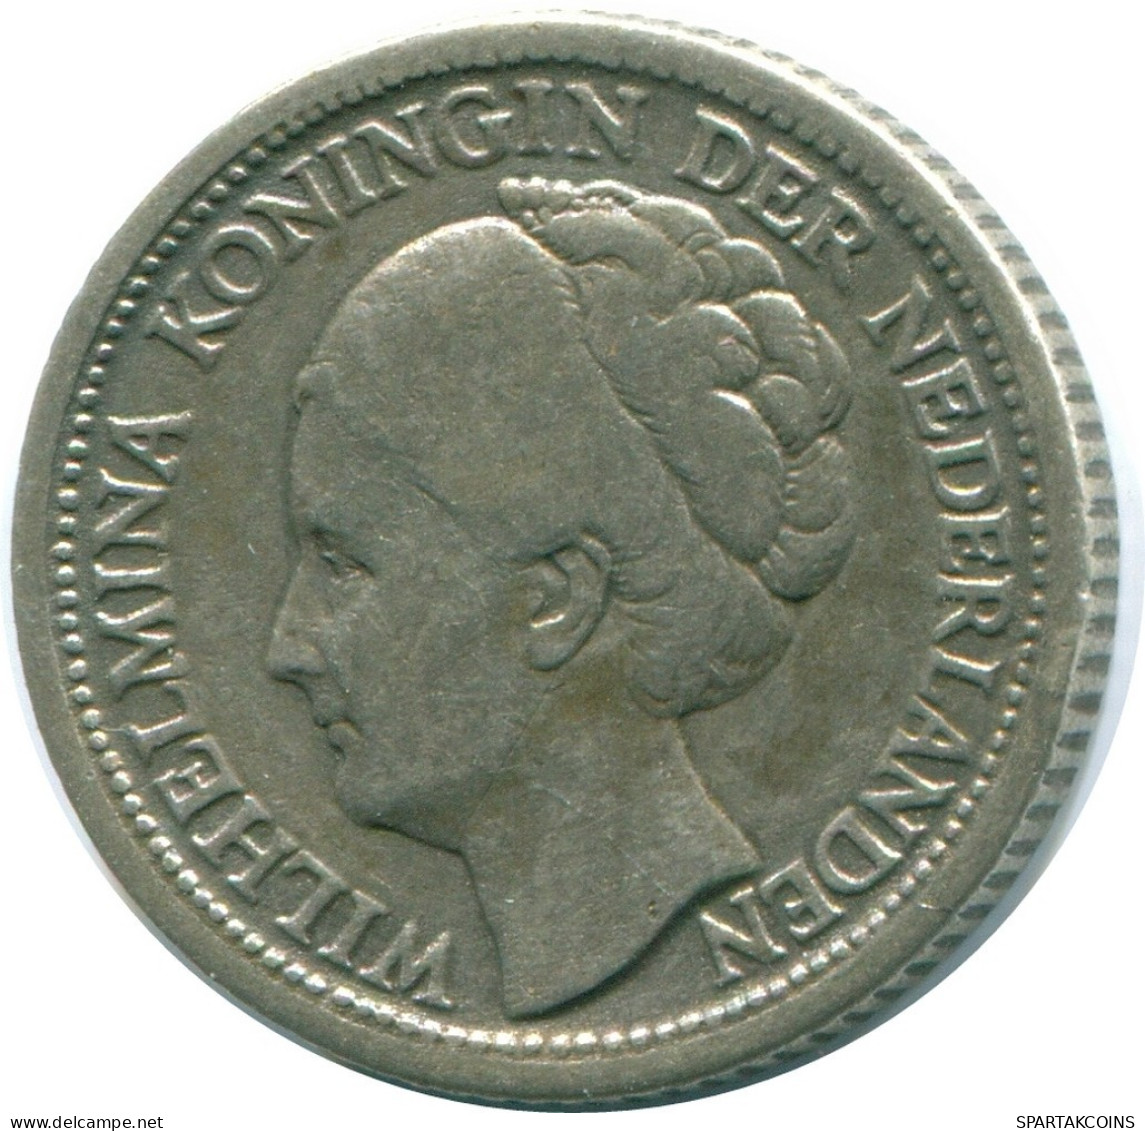 1/4 GULDEN 1944 CURACAO Netherlands SILVER Colonial Coin #NL10578.4.U.A - Curacao